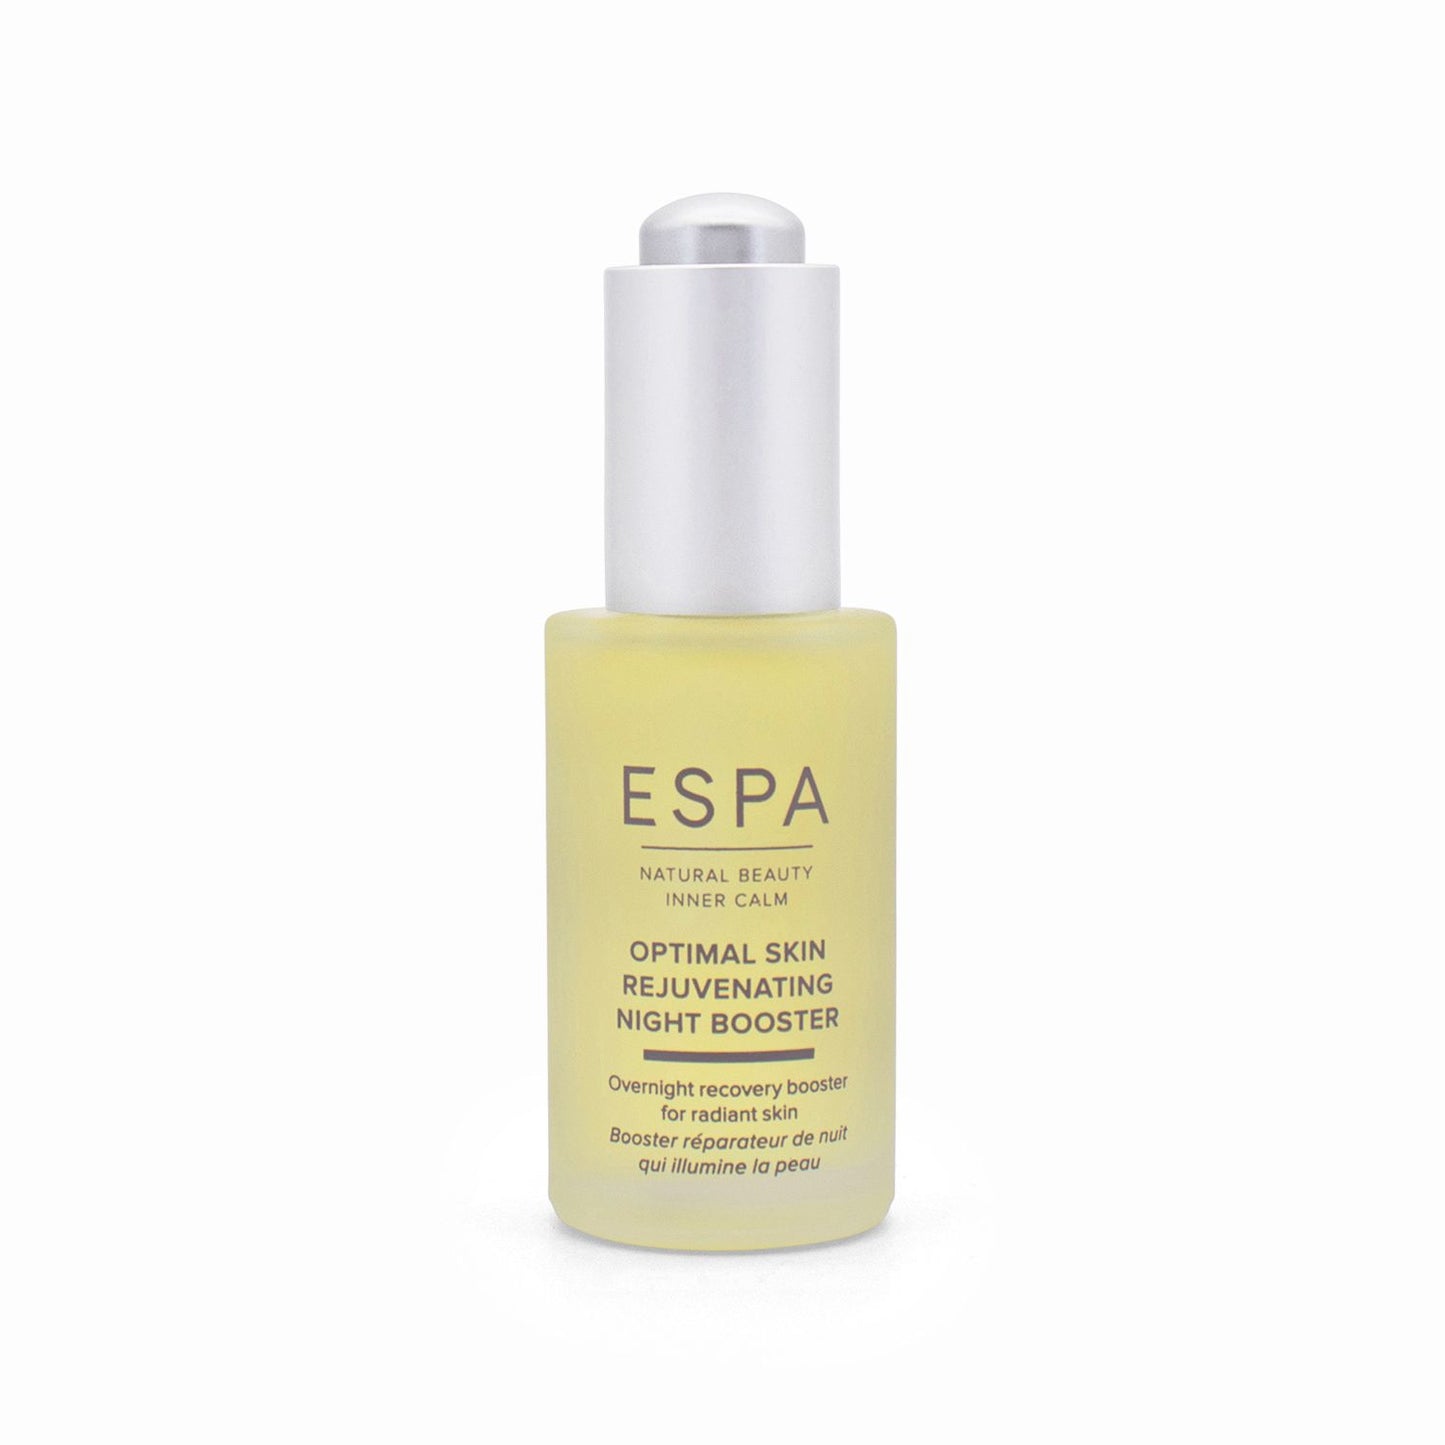 ESPA Optimal Skin Rejuvenating Night Booster 30ml - Missing Box